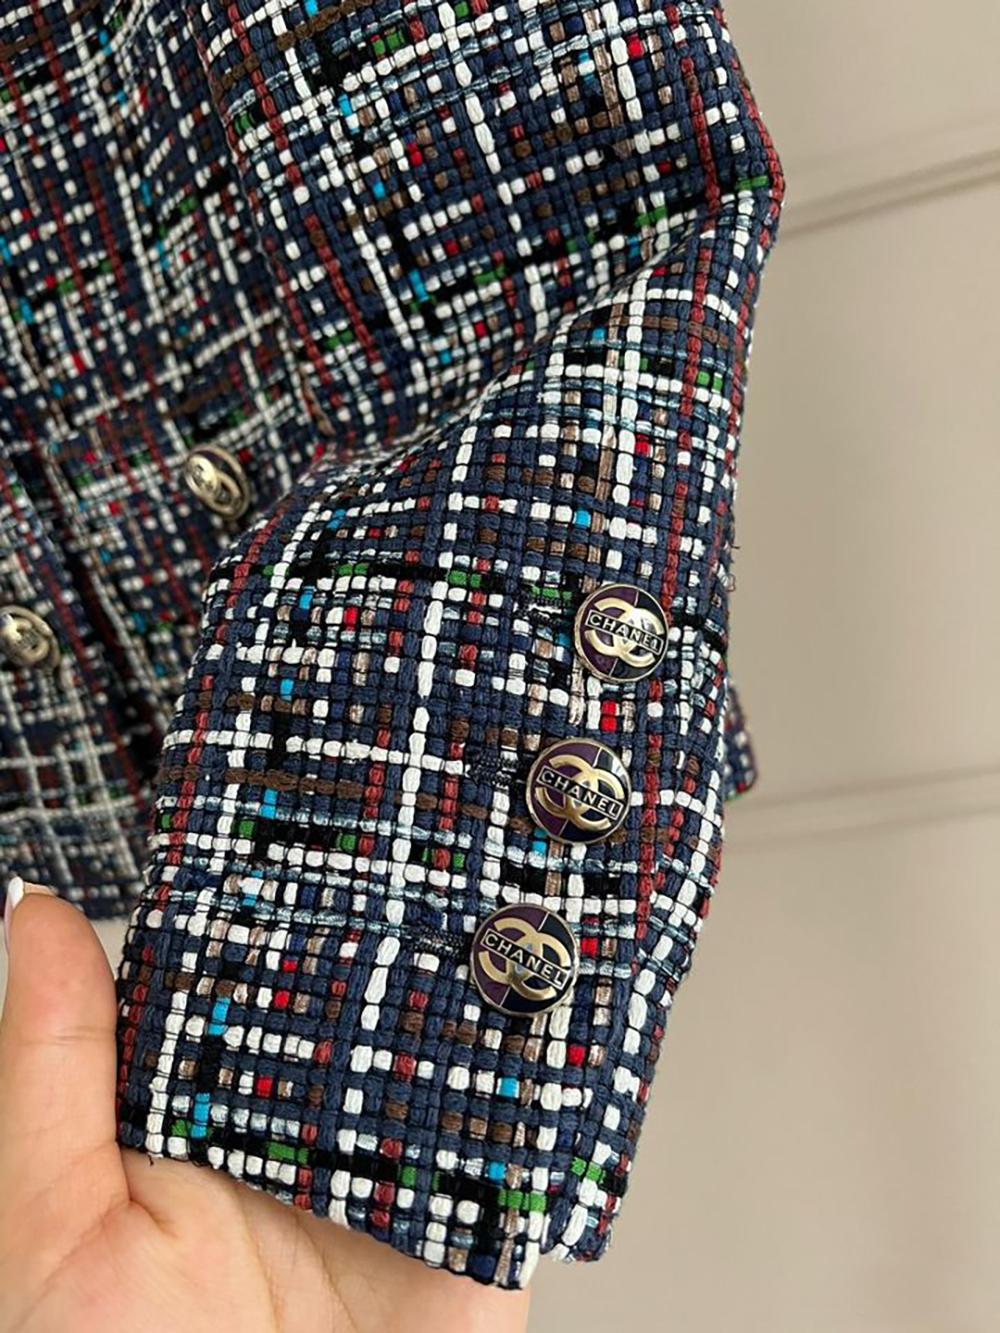 Women's or Men's Chanel Kate Middleton Style Ribbon Tweed Jacket